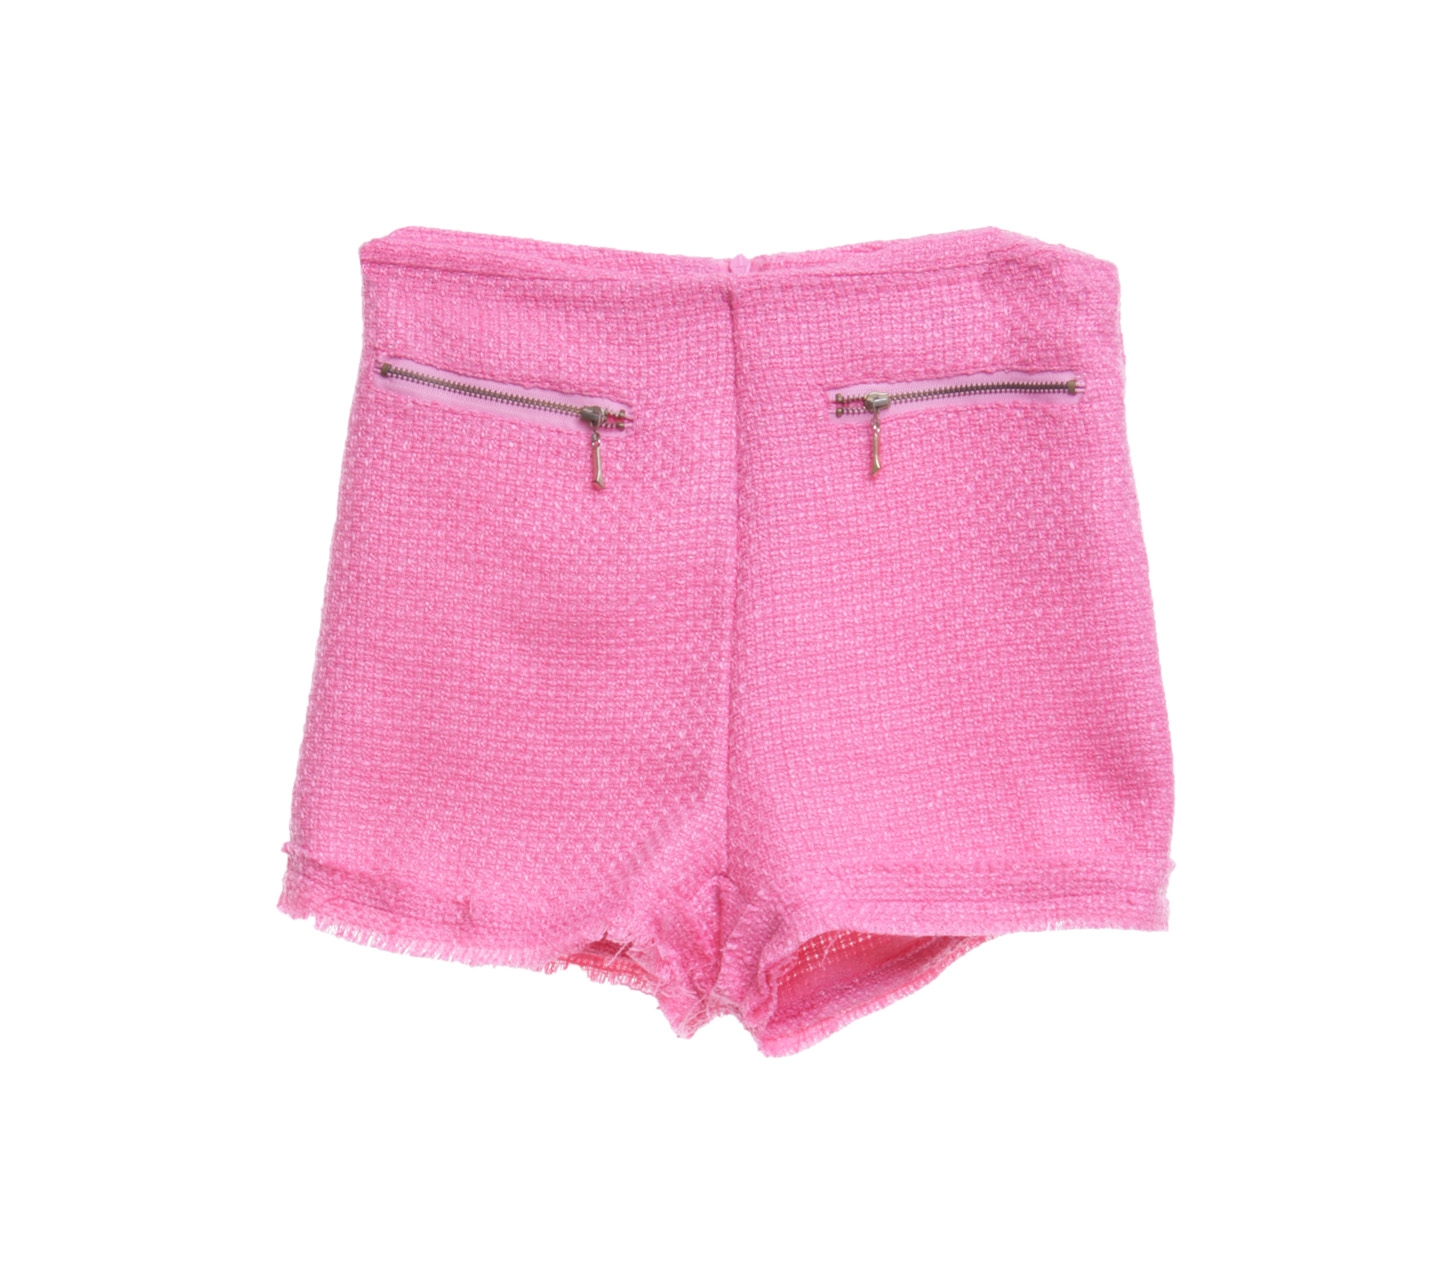 The Stylish Pink Knit Short Pants